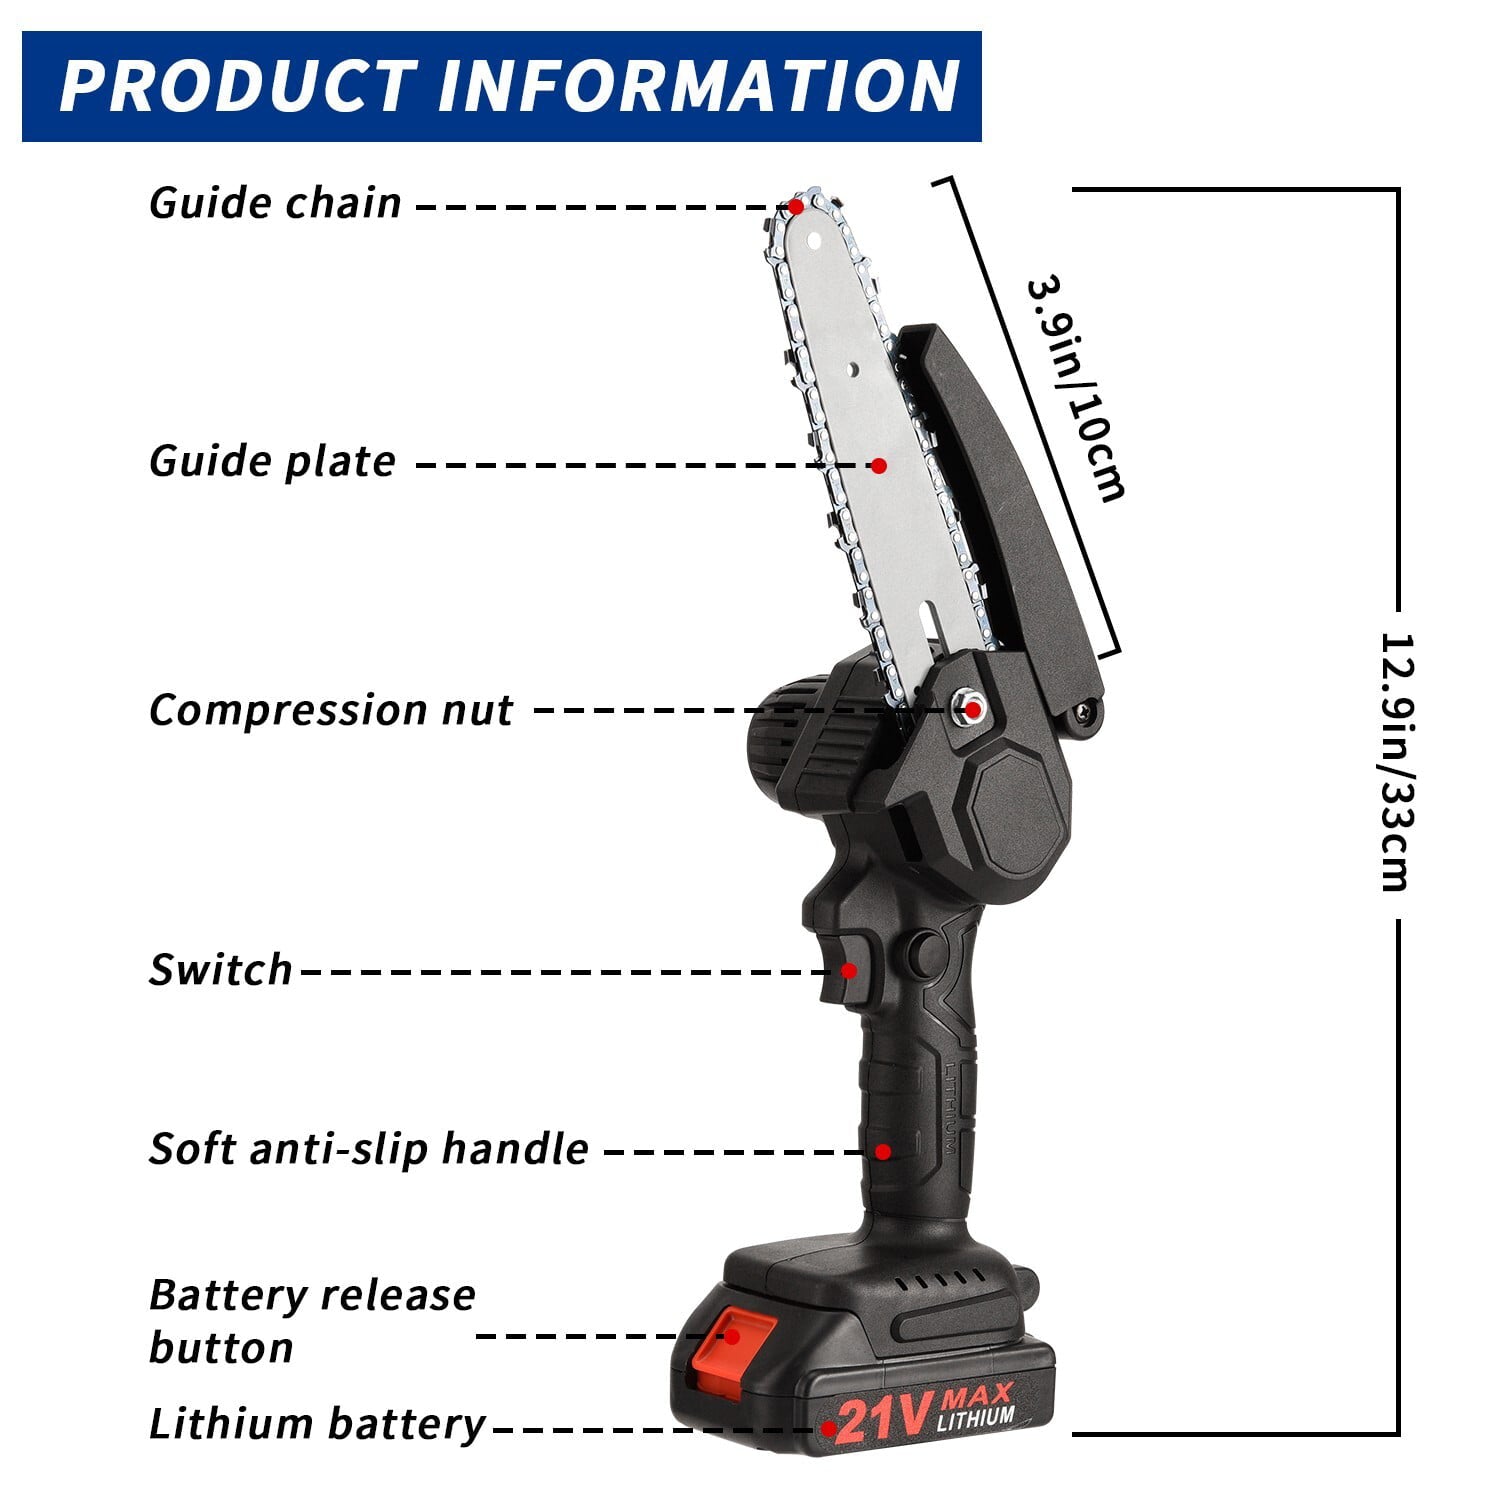 WUKETIN Mini Chainsaw Kit 4-Inch+6-Inch Adjustable Cordless Handheld Chain Saw